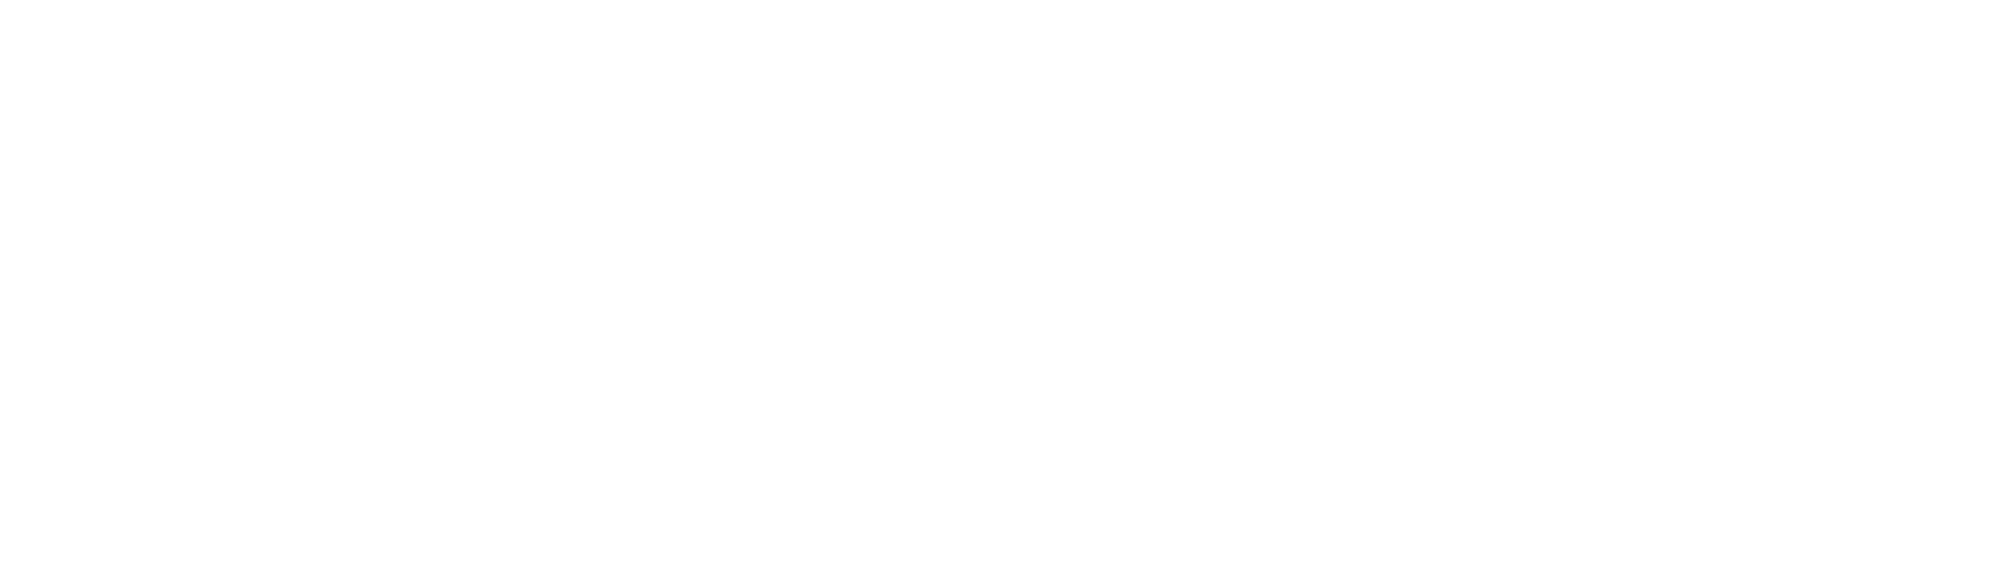 Rare Car Sales